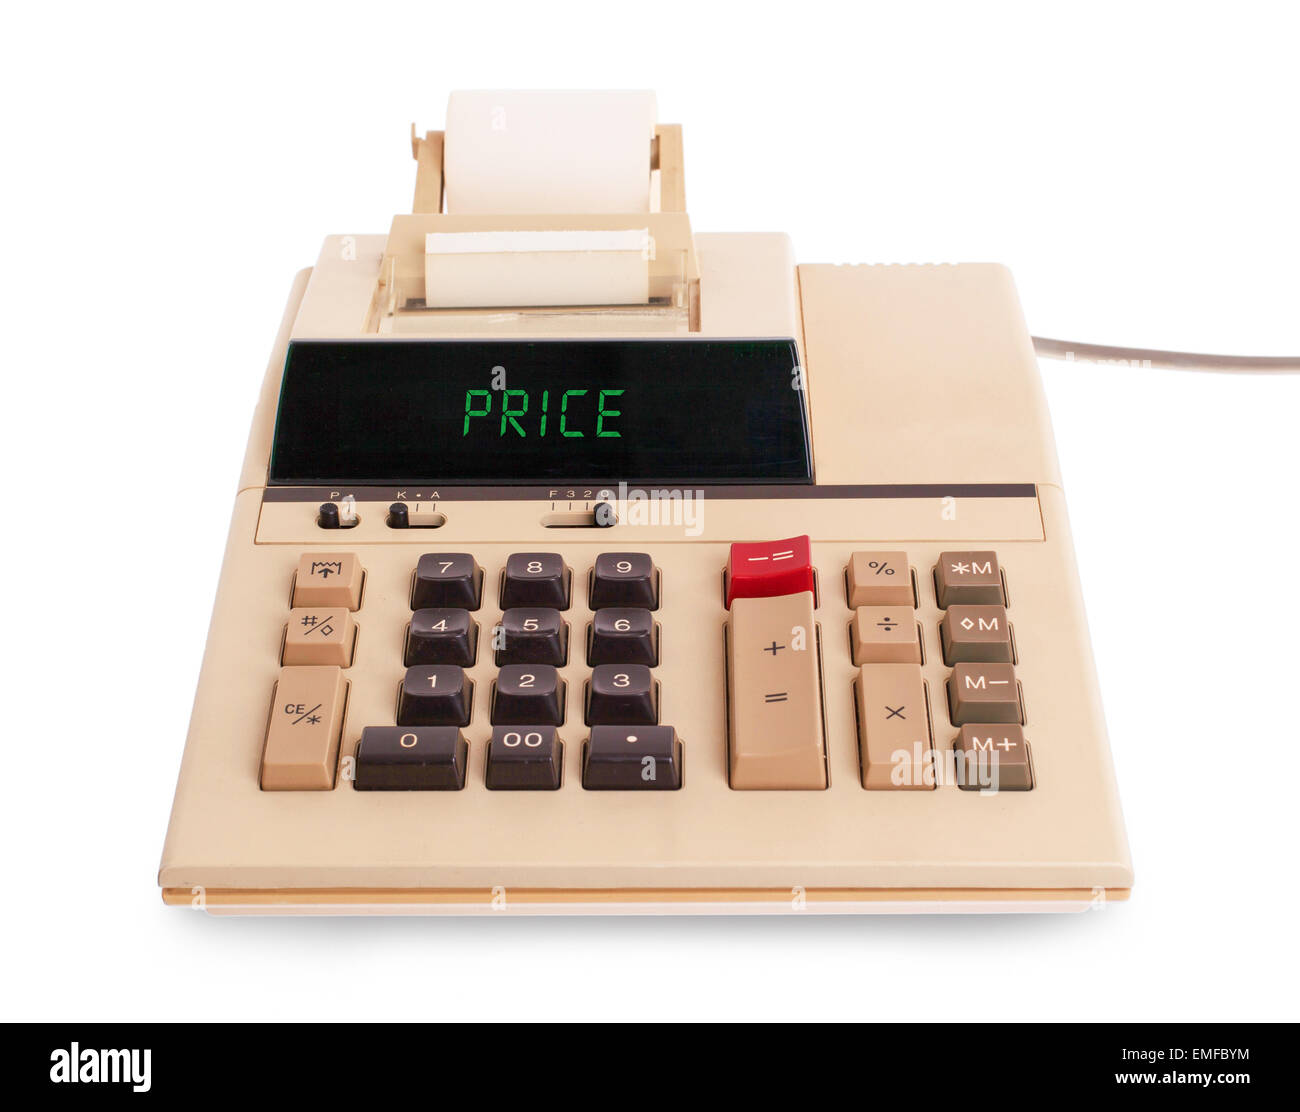 Calculadora antigua - precio Fotografía de stock - Alamy